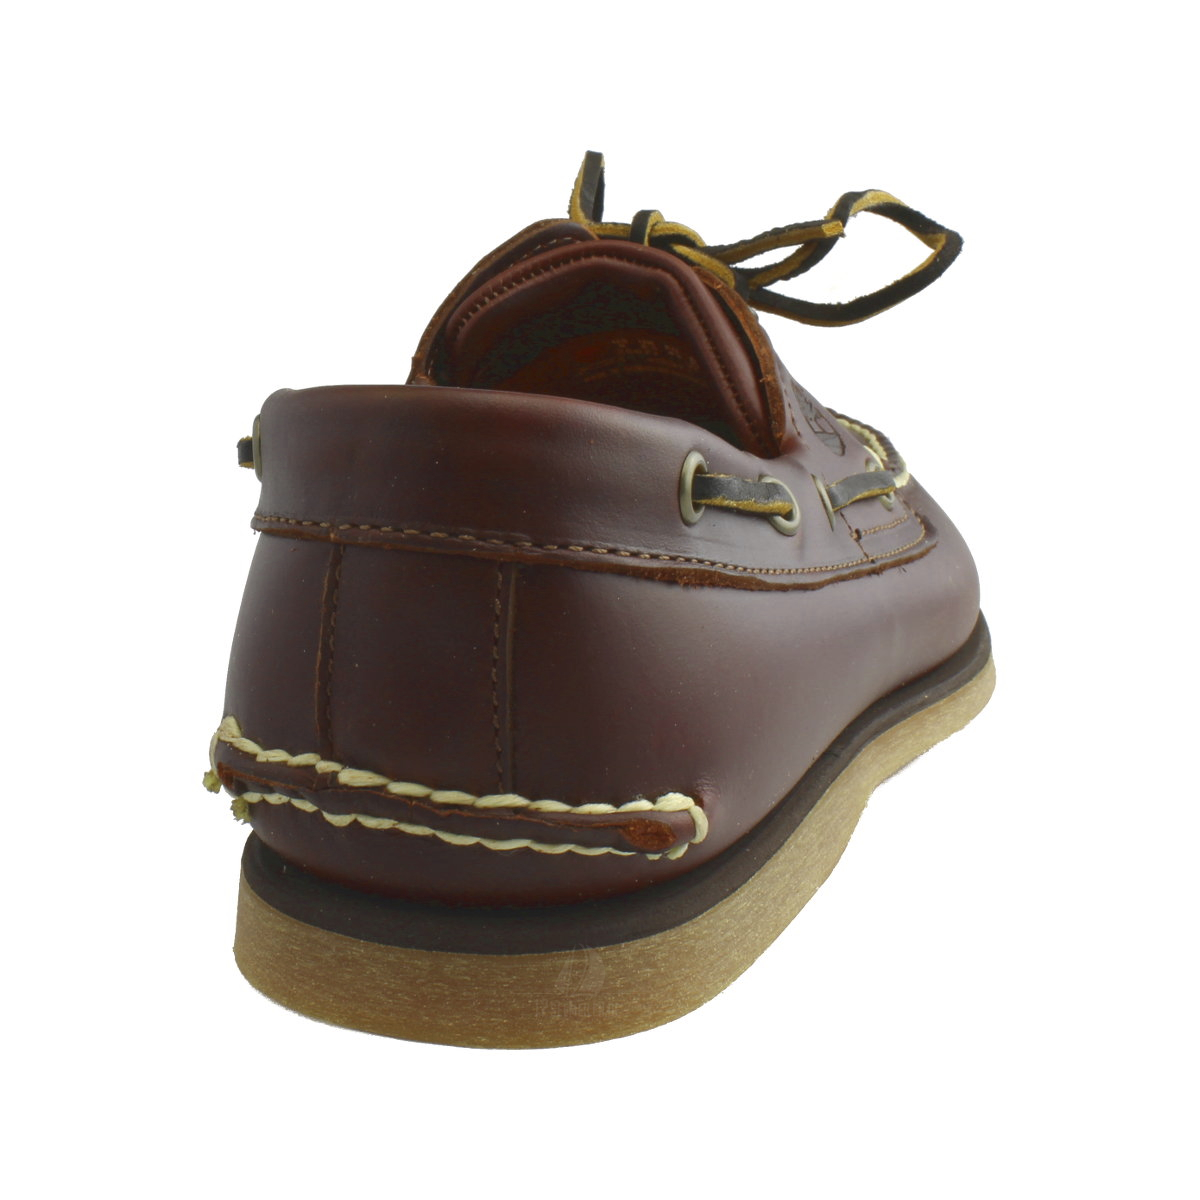 Timberland Classic Boat chaussures bateau Hommes brun - rouge eu 42 ( us 8,5 )